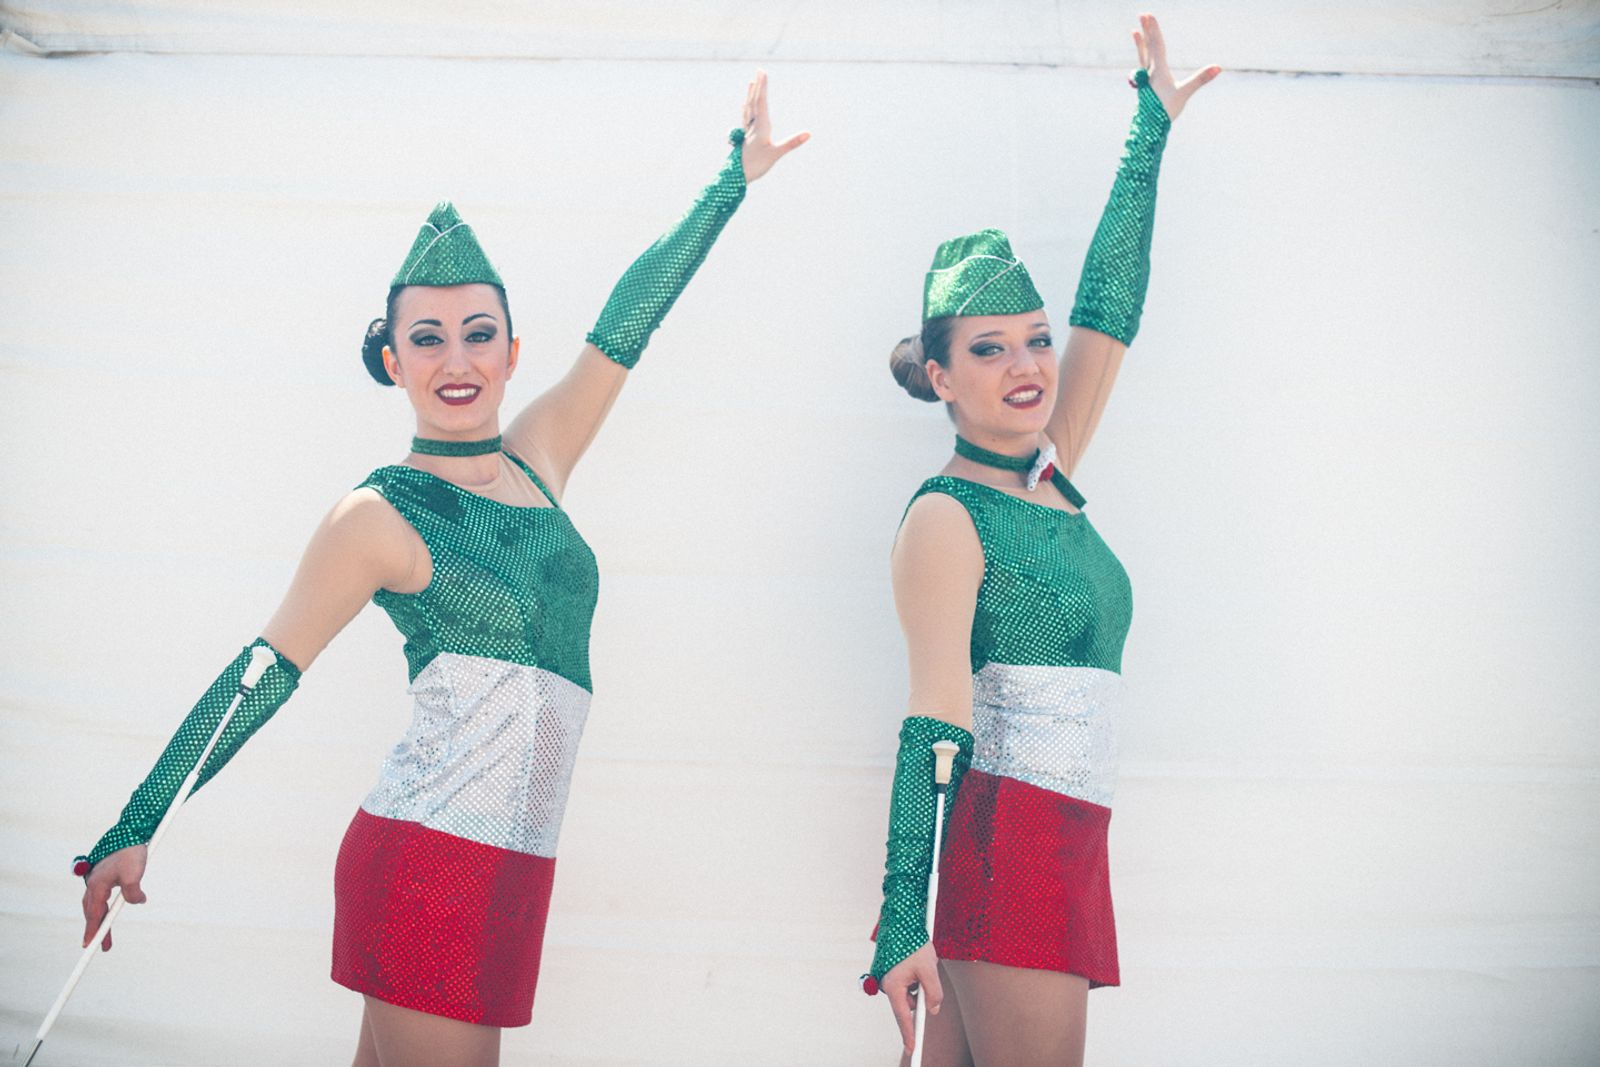 © Agnese Morganti - Viareggio, 2017. Two majorettes pose in their matching Italian flag outfits before performing.